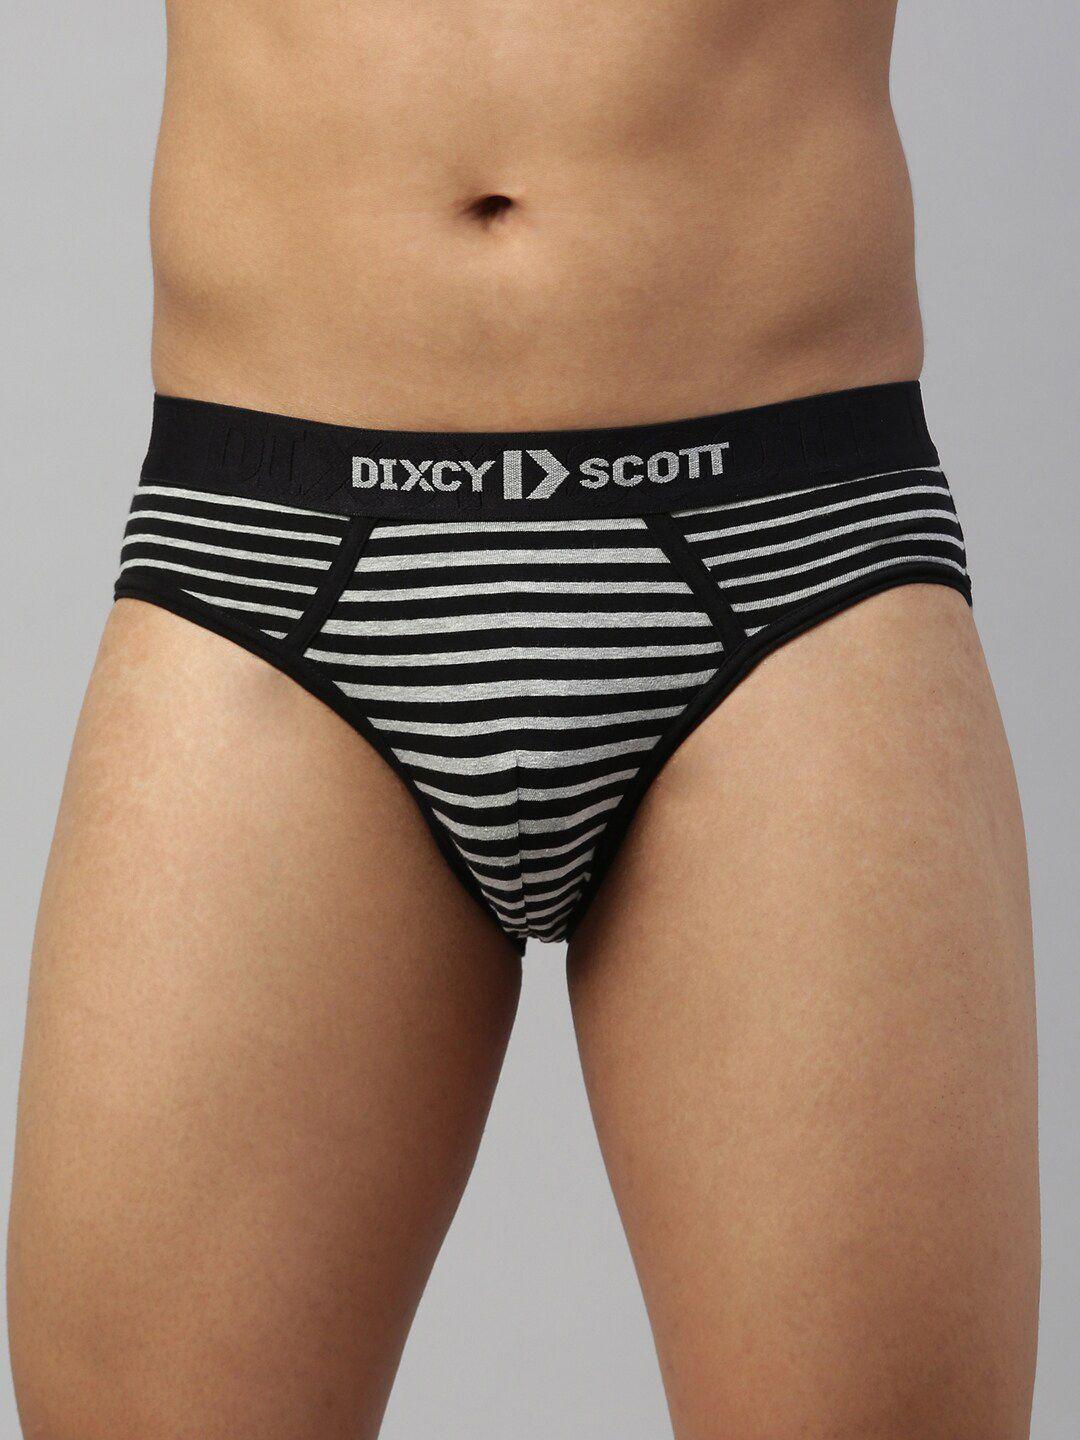 dixcy scott maximus men black & grey striped basic briefs maxb-006-flux brief-p1